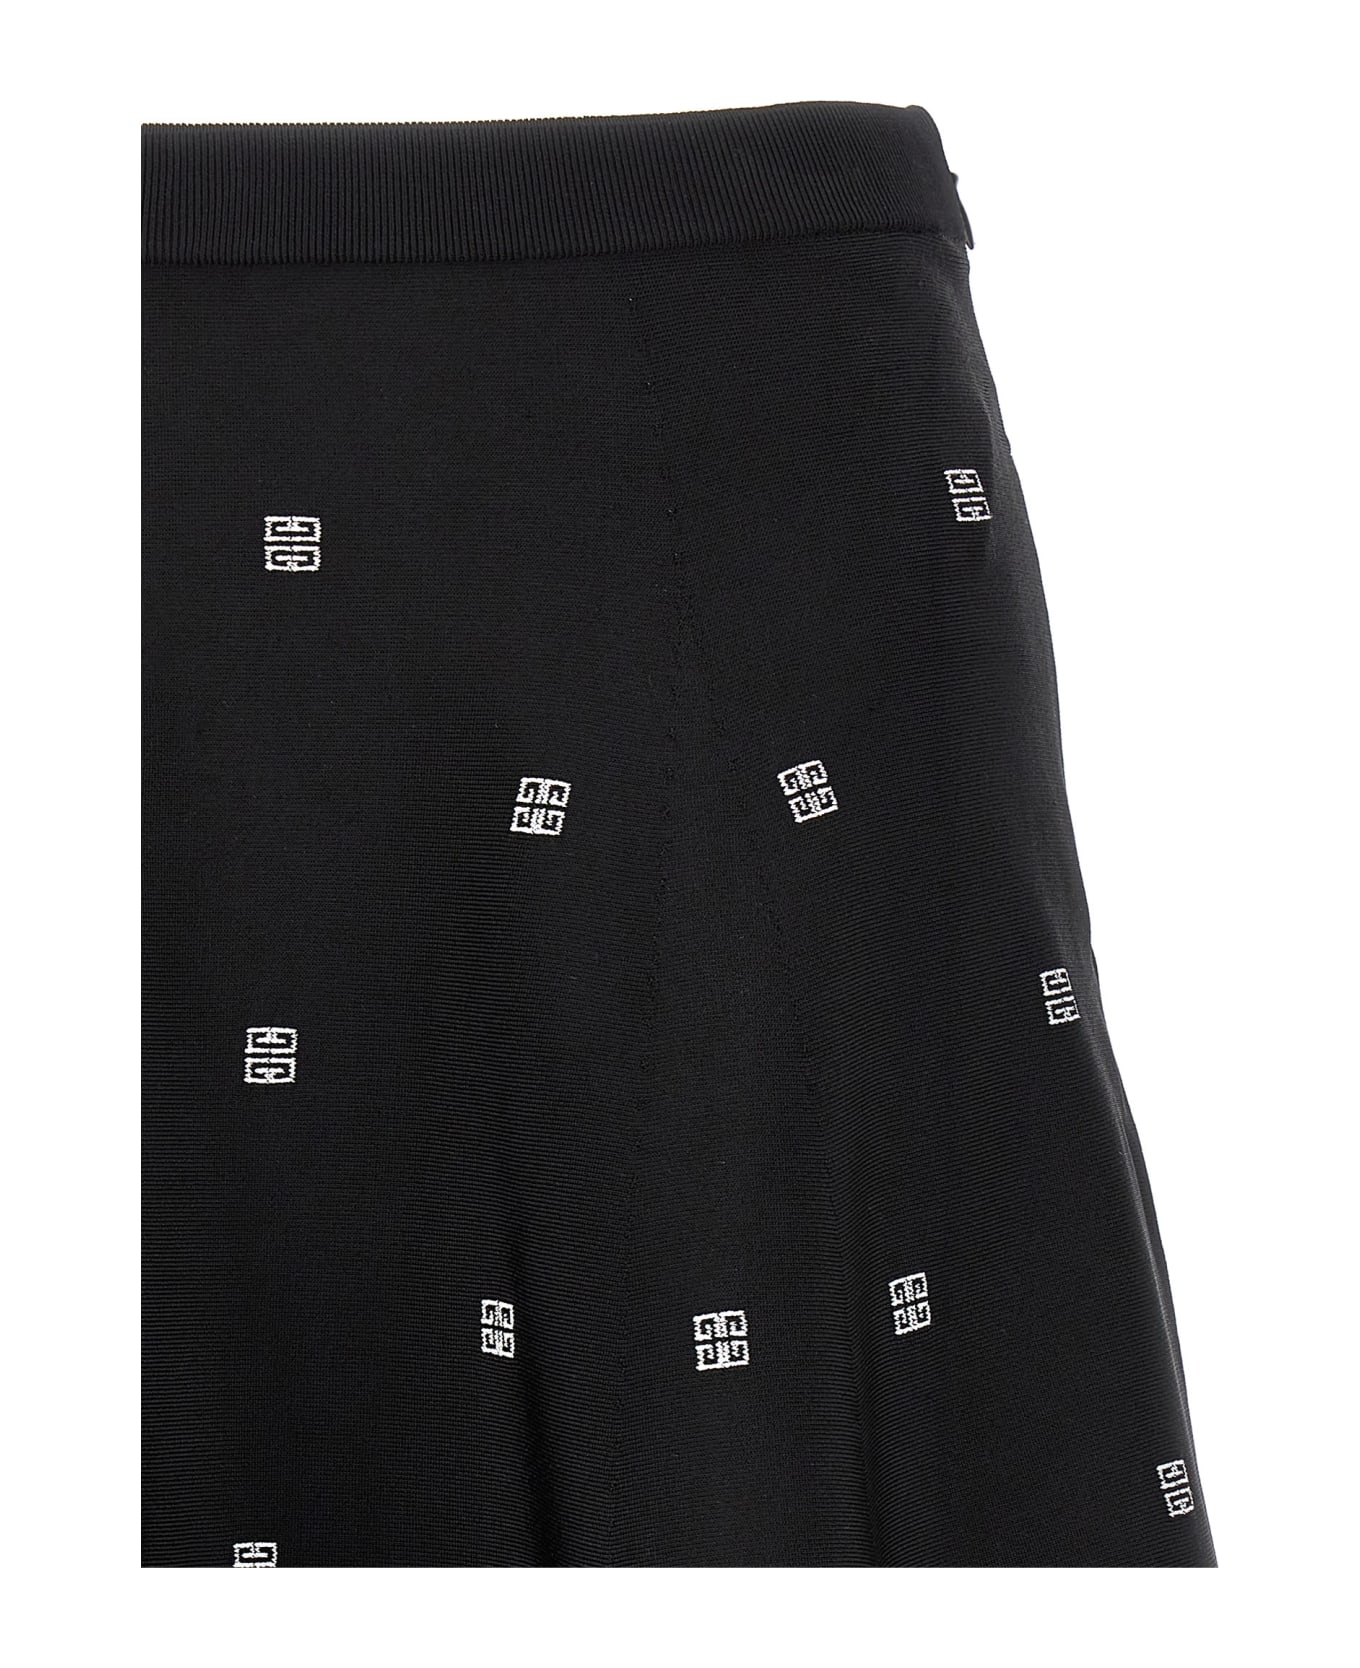 Givenchy All Over Logo Skirt - black